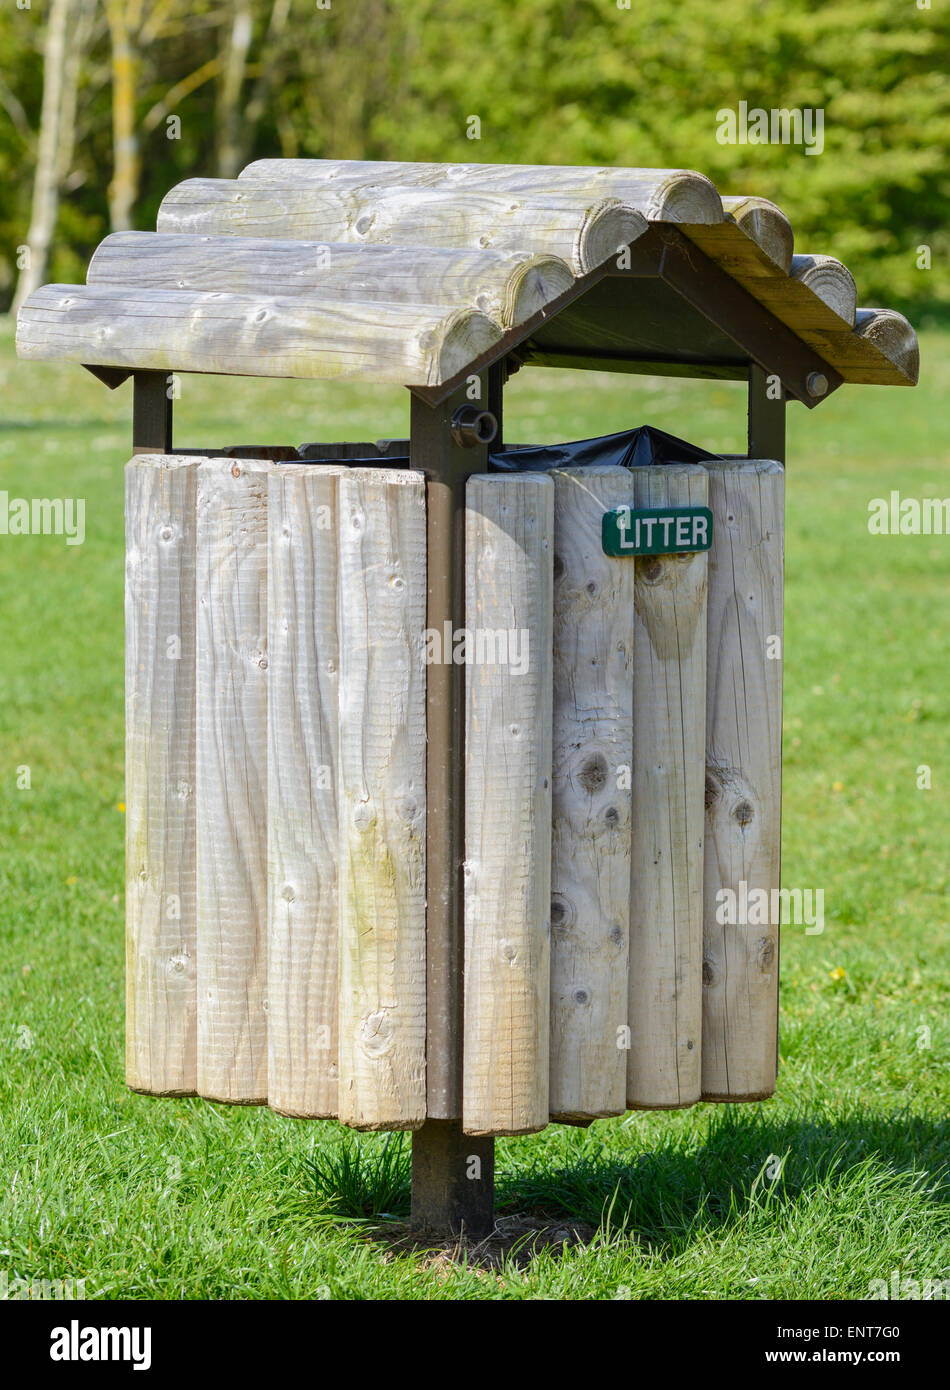 Wooden litter bin in a park. Stock Photo